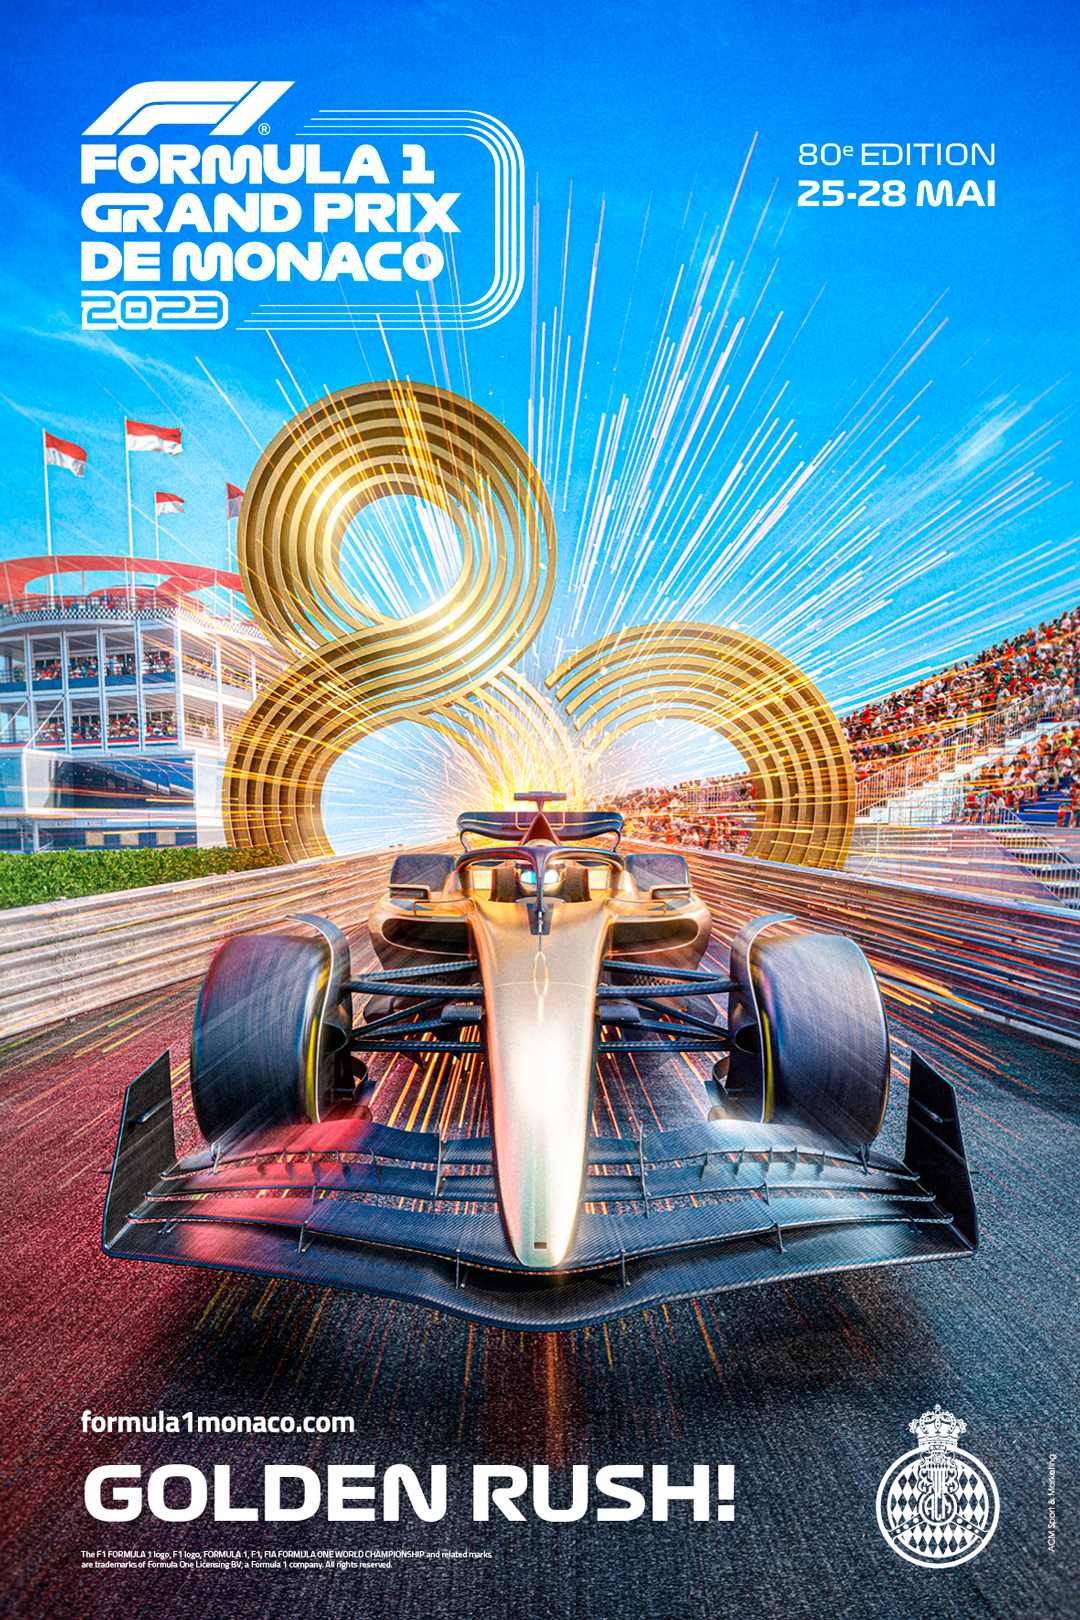 80th Formula 1 Grand Prix de Monaco - Automobile Club de Monaco